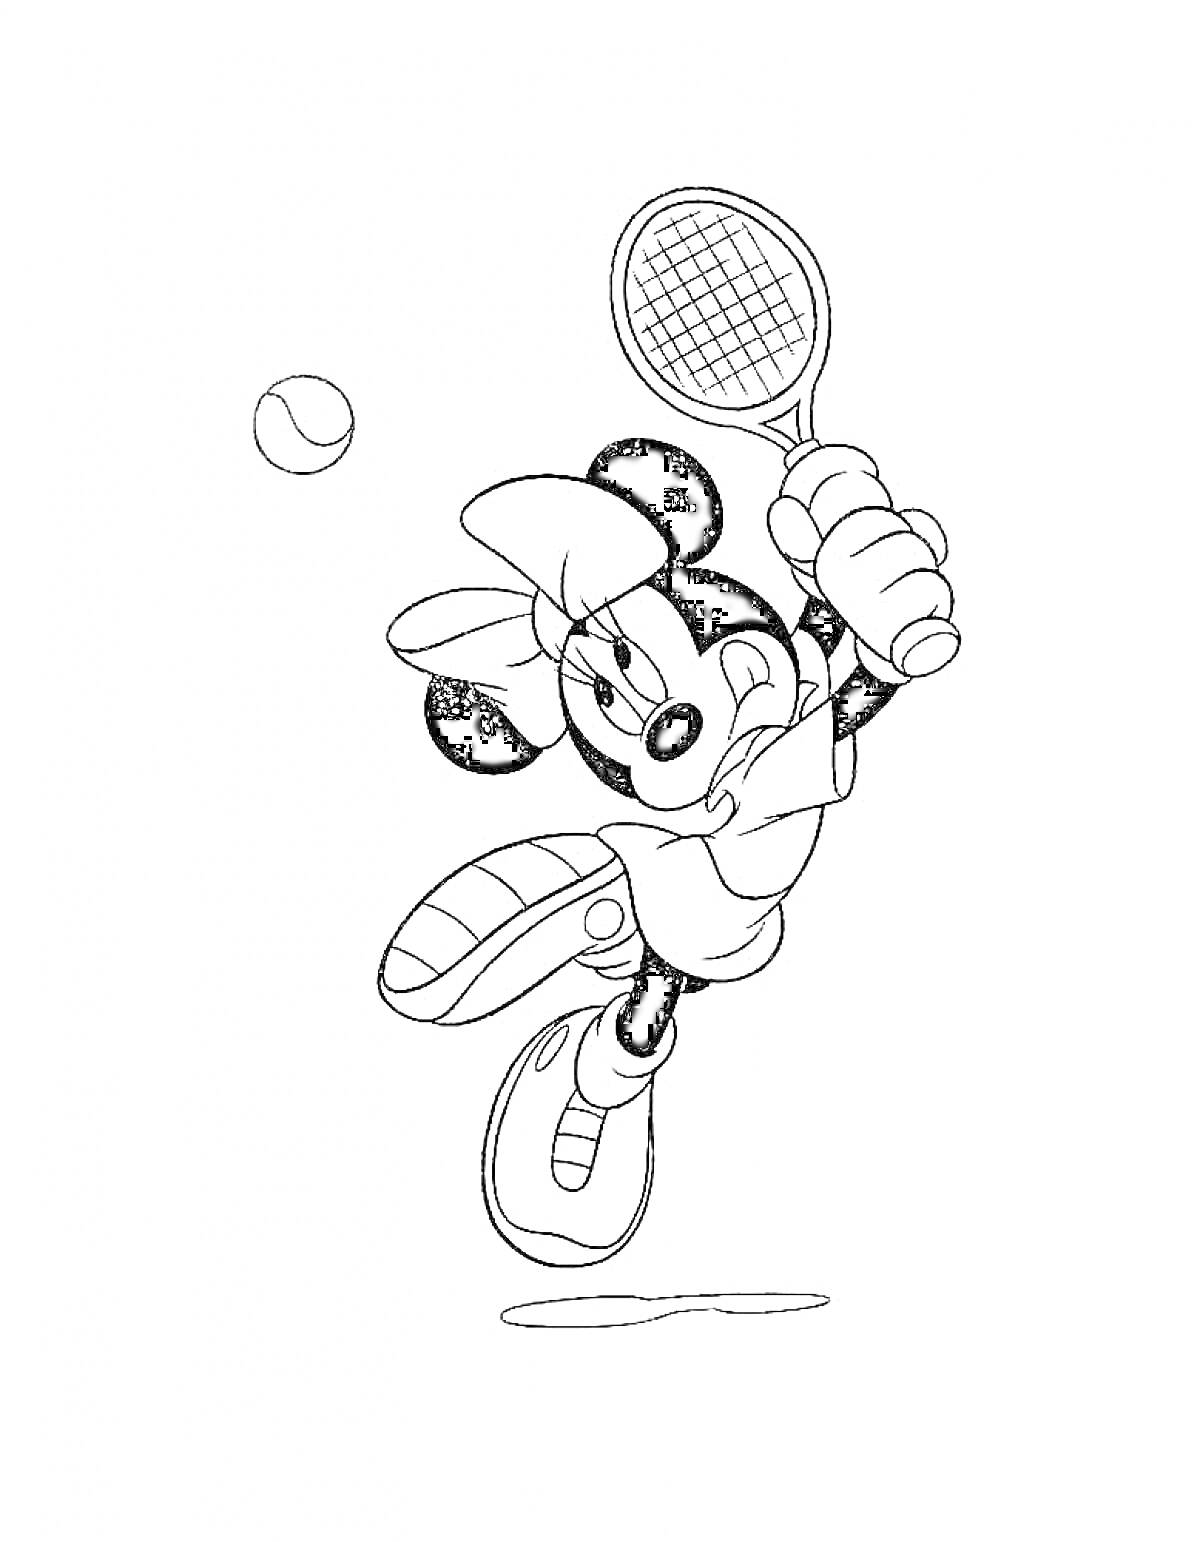 Раскраска Теннисистка с ракеткой в руках, отбивающая мяч